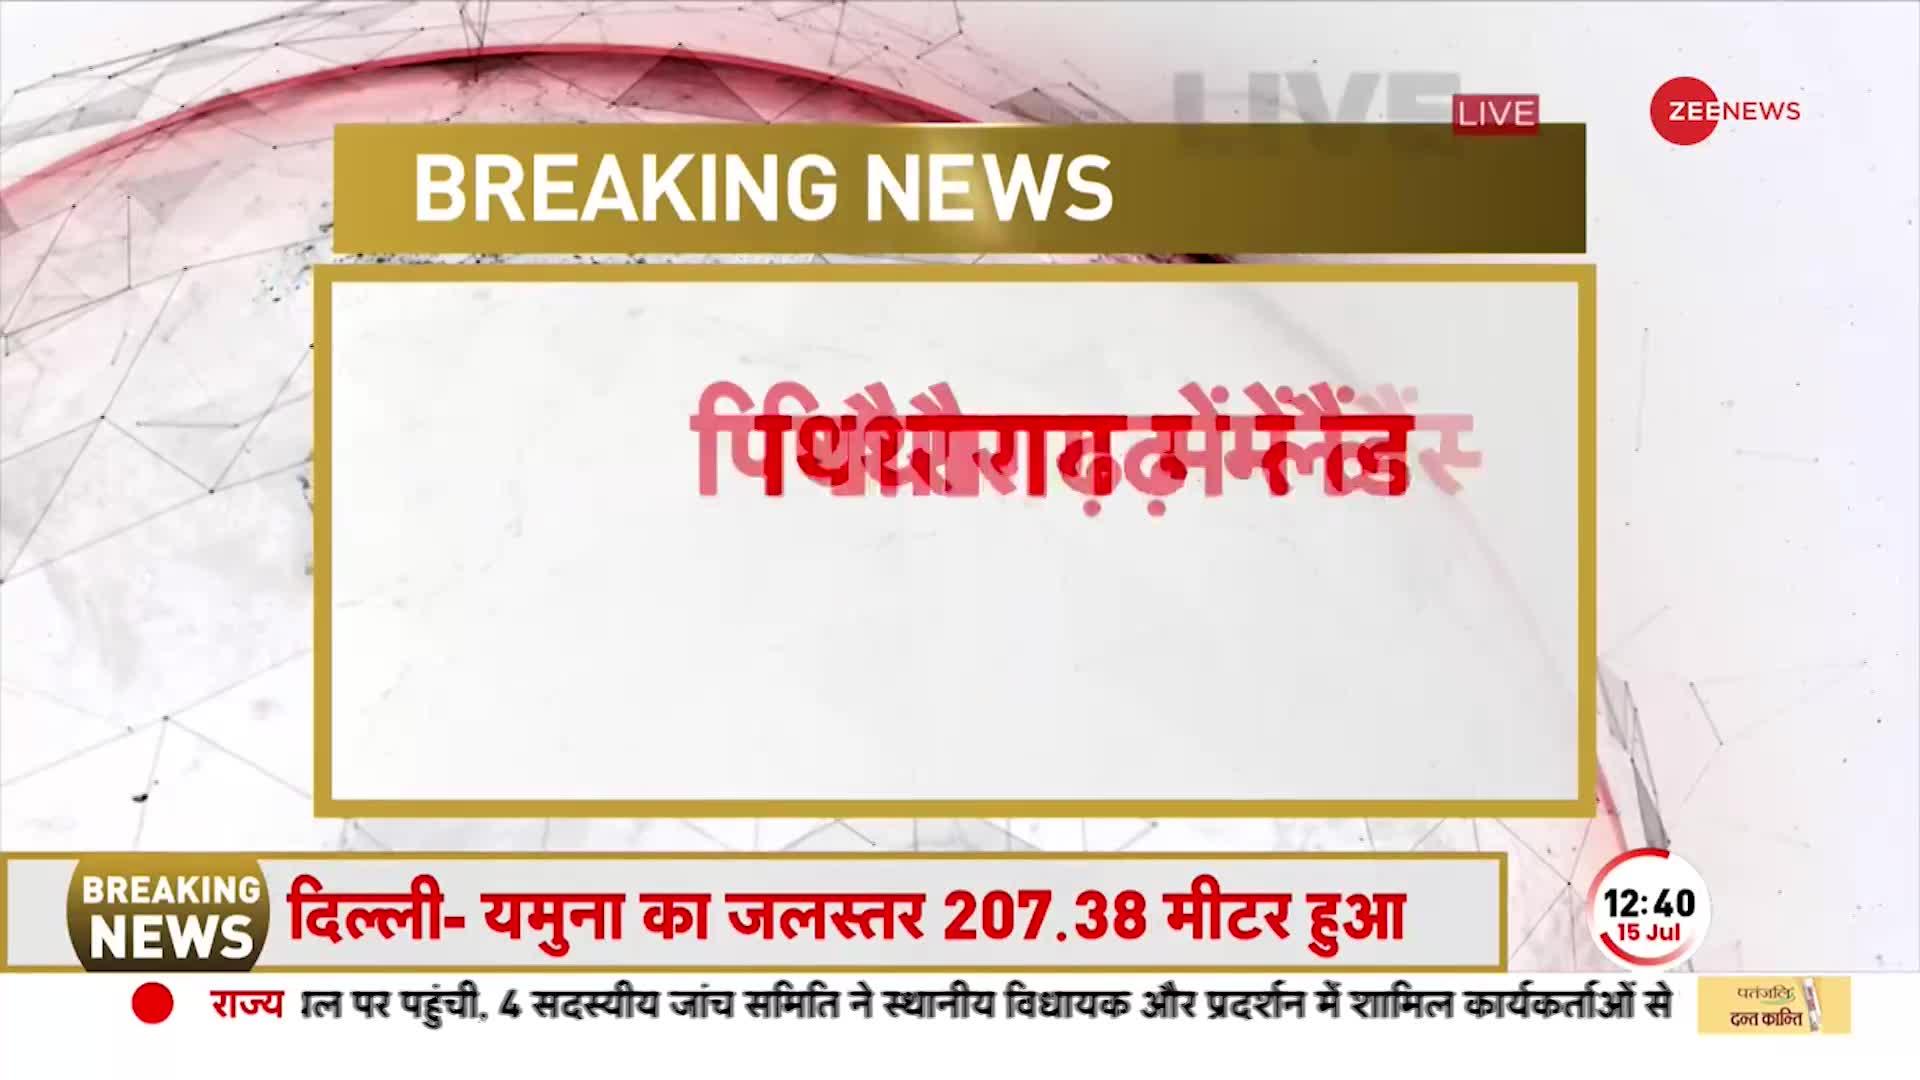 UTTRAKHAND LANDSLIDE NEWS: पिथौरागढ़ में टूटकर गिरा पहाड़, बंद हुआ Highway | Uttarakhand Breaking